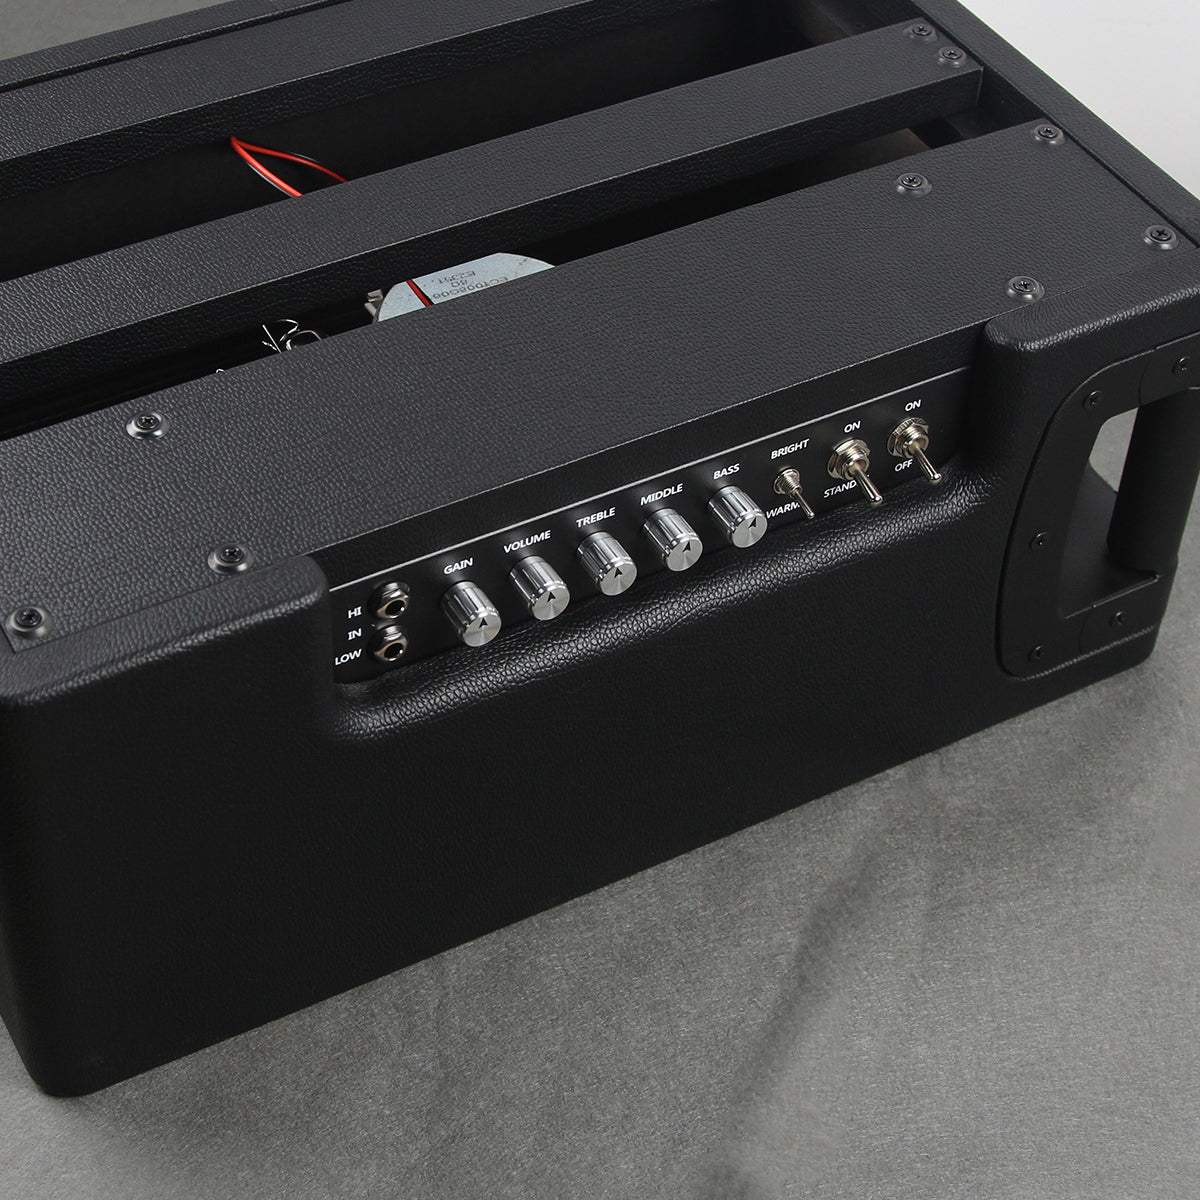 Oripure OA-C05 5W All Tube Guitar Amplifier Combo